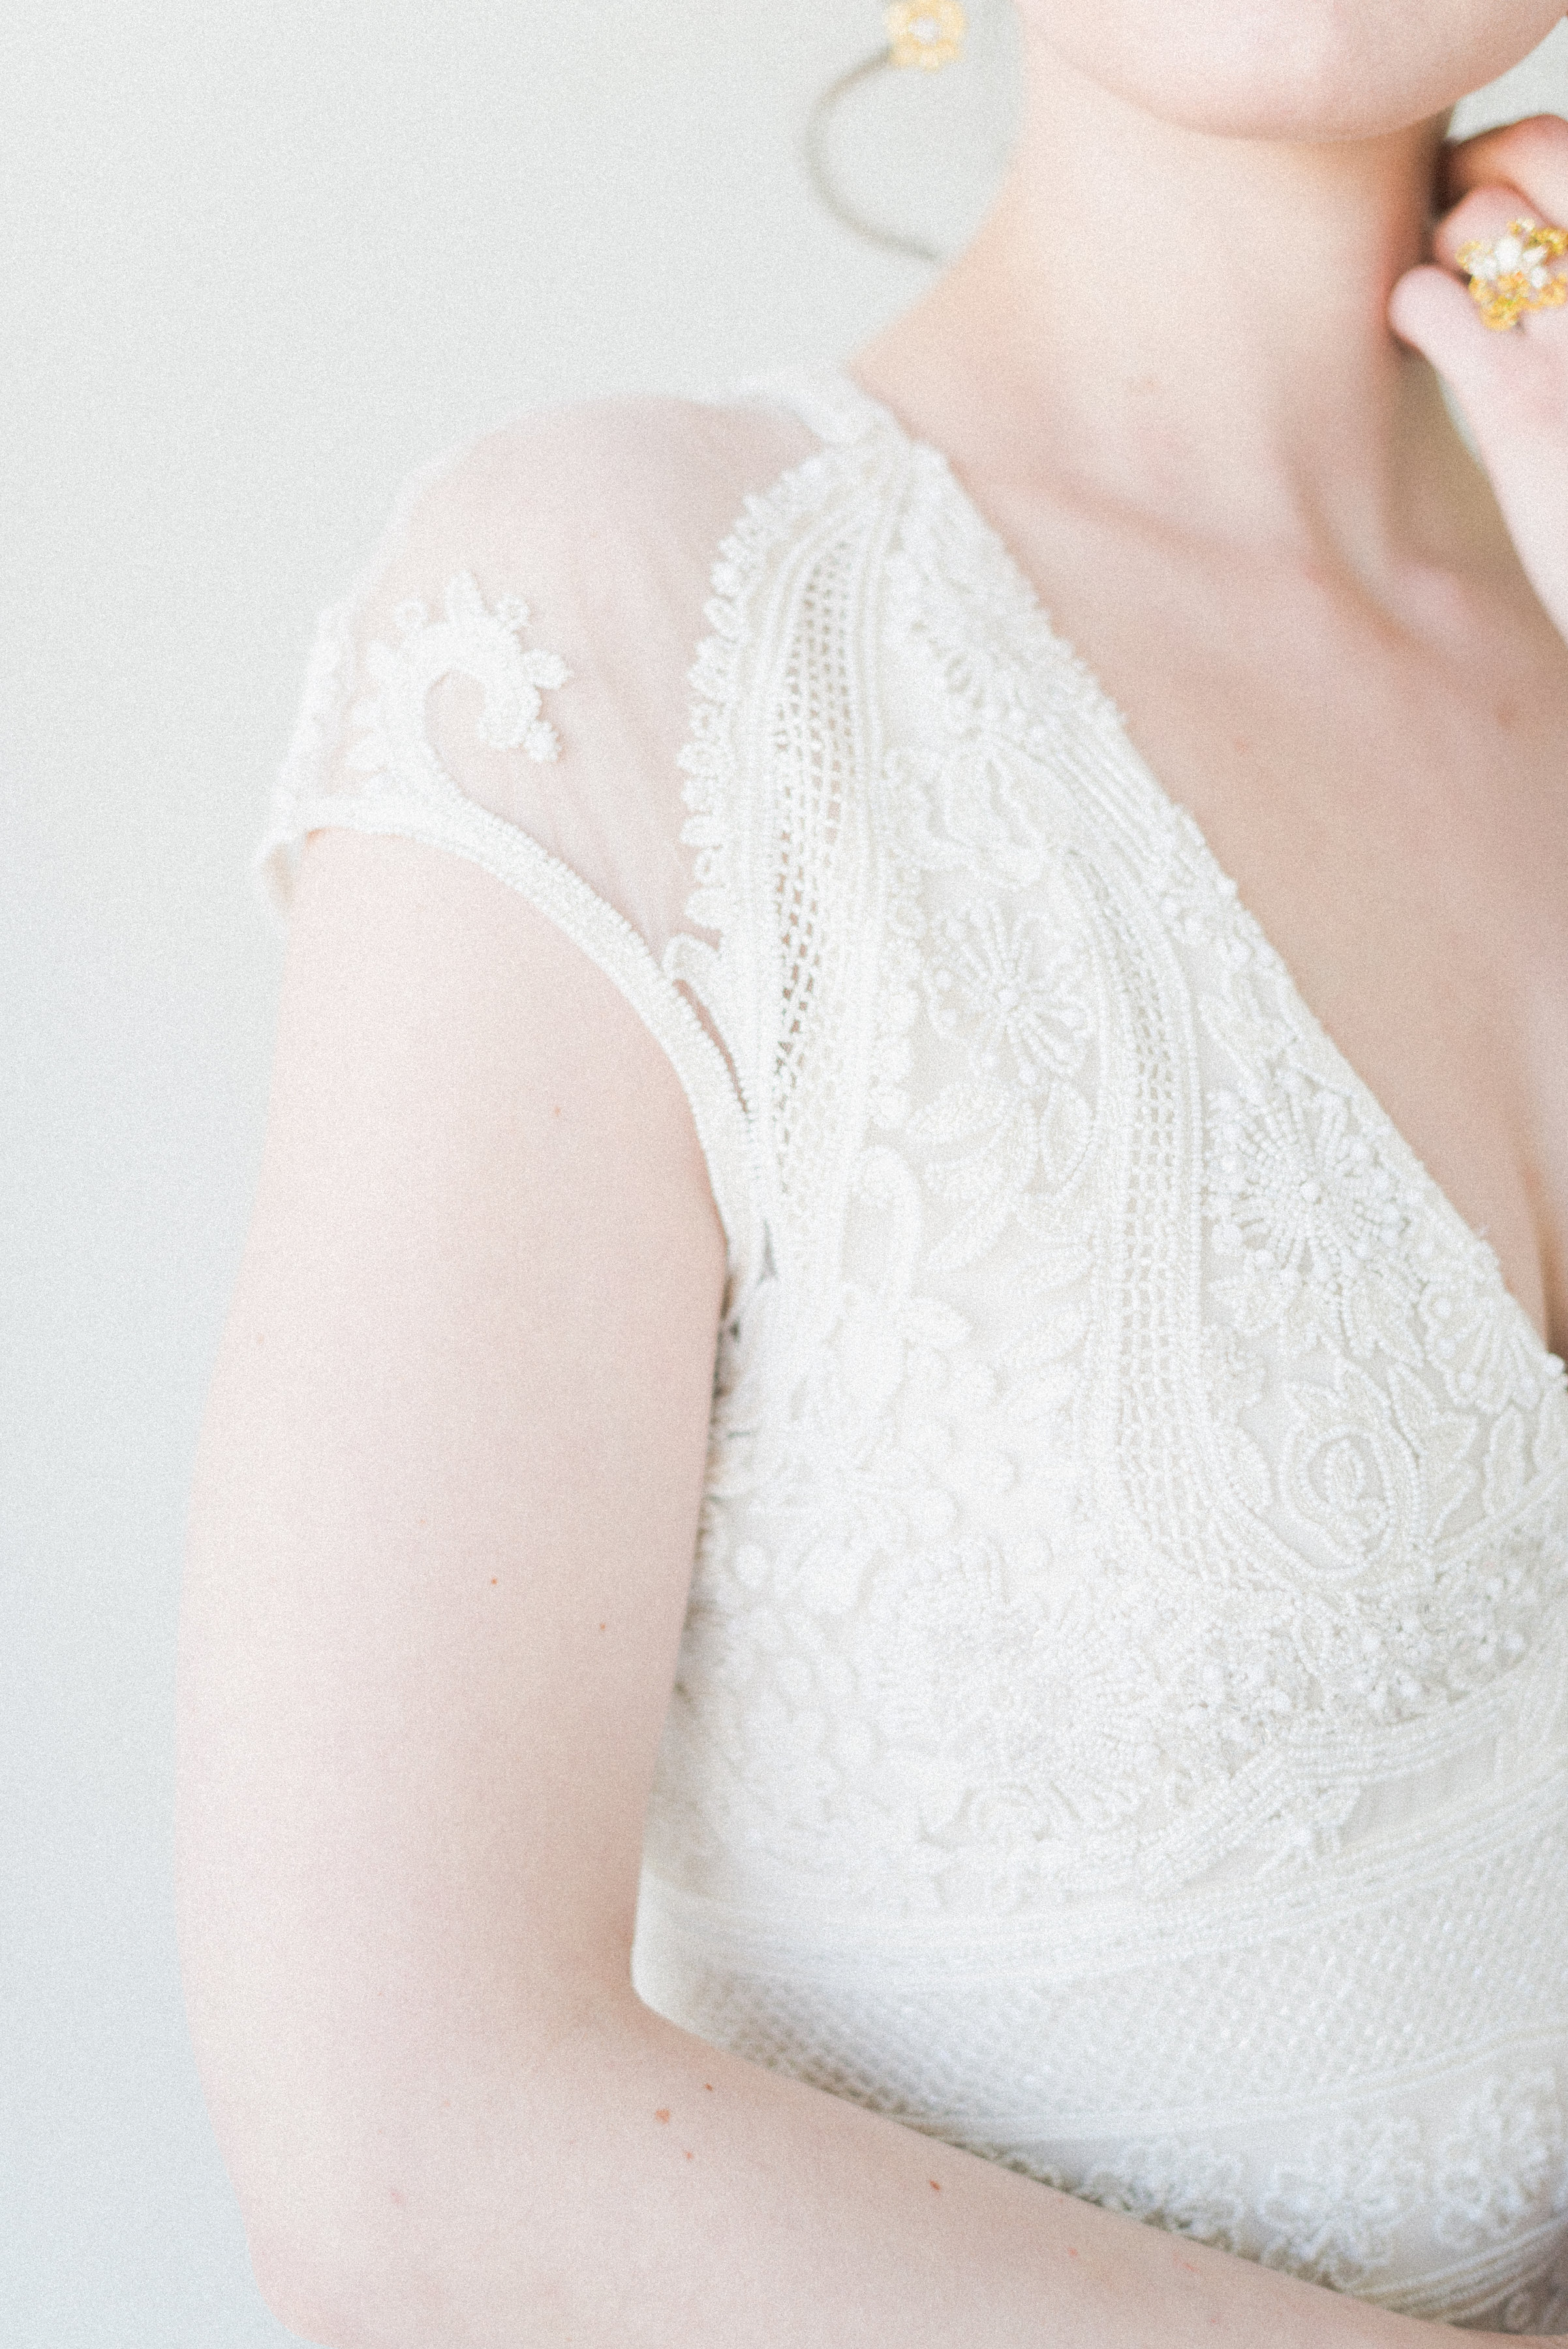  Naeem Khan "Marseille" wedding dress | Spring Bridal Inspiration from Little White Dress Bridal Shop in Denver, Colorado | Decorus Photography 